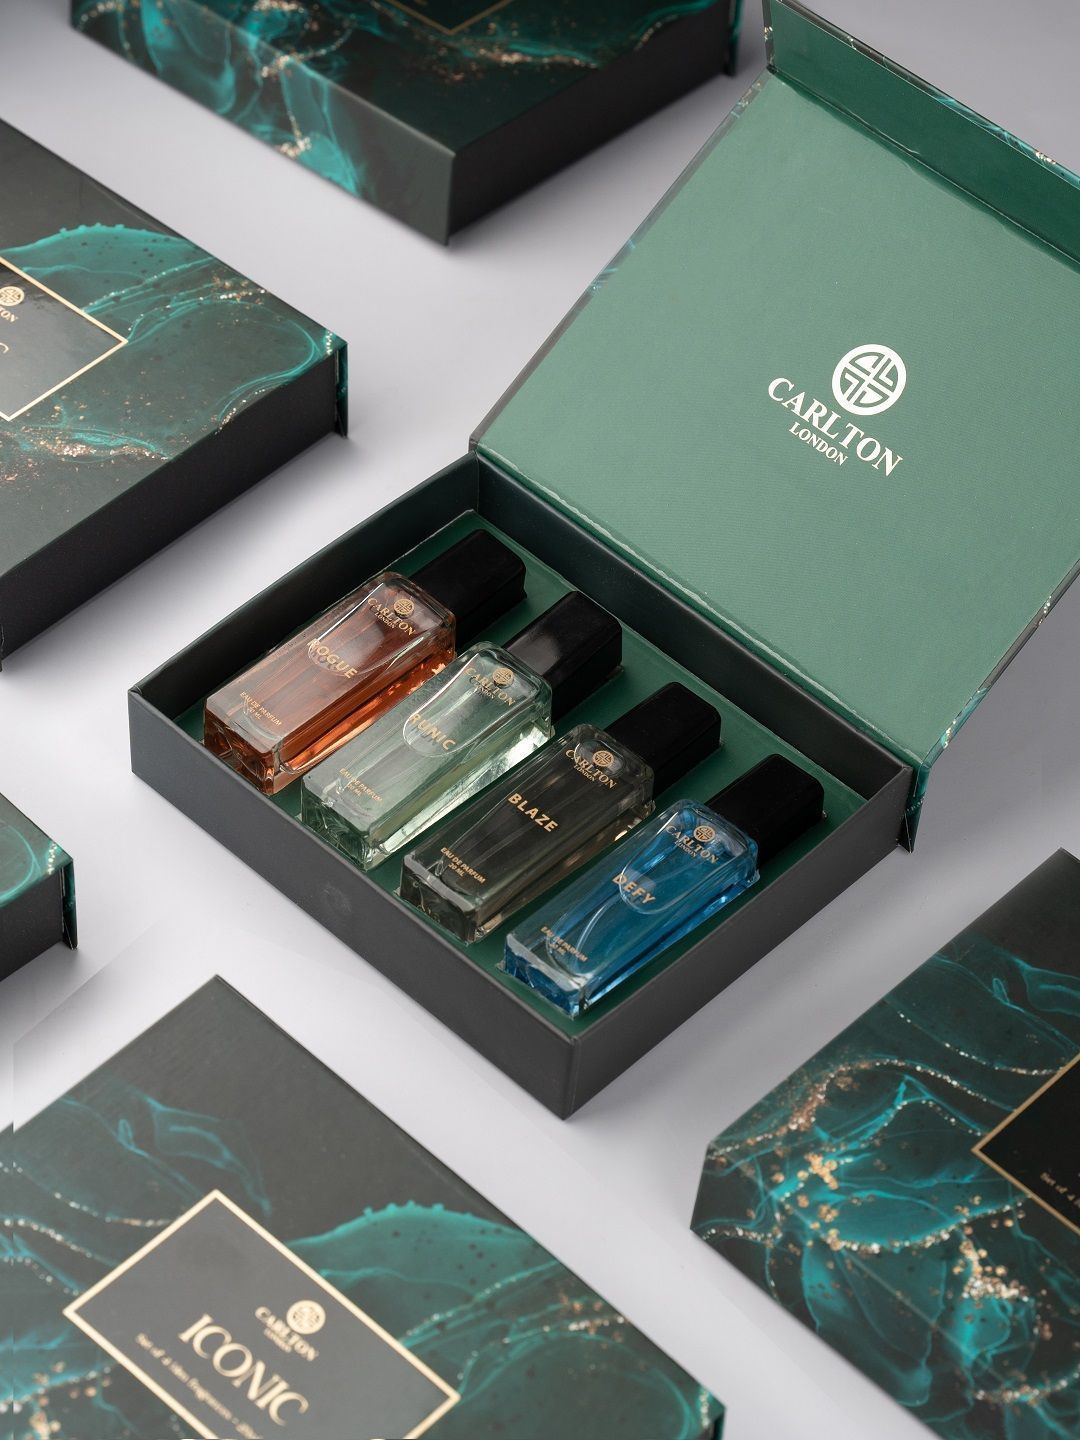 Carlton London Men ICONIC Gift Set of 4 EDP Perfume - 20ml each